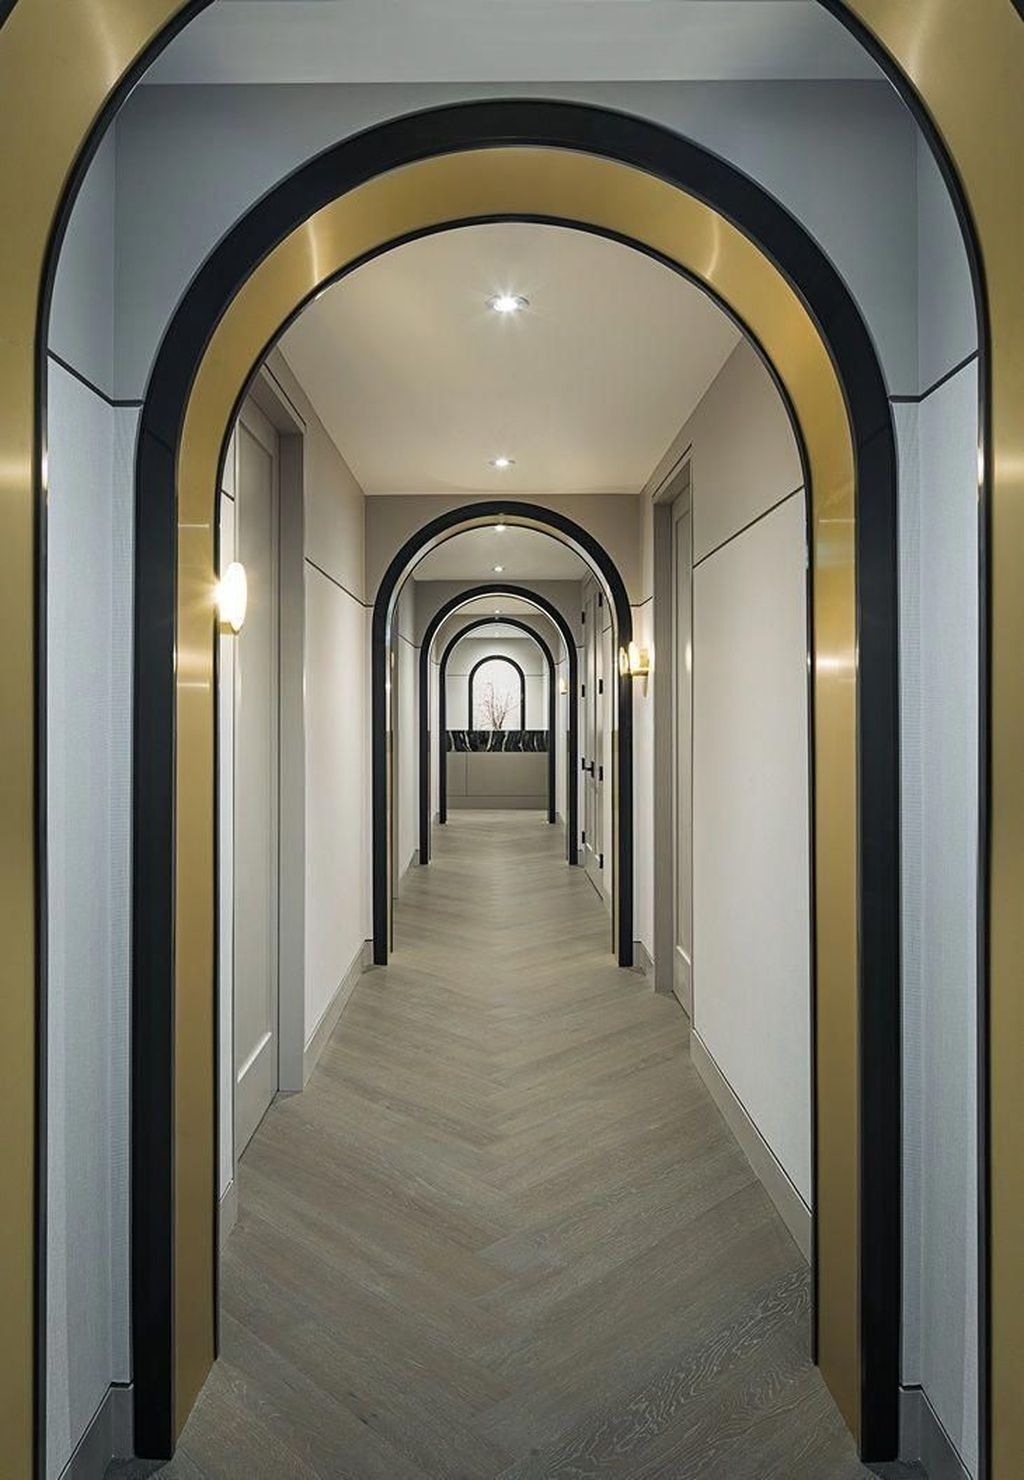 Astonishing Home Corridor Design For Your Home Inspiration 47